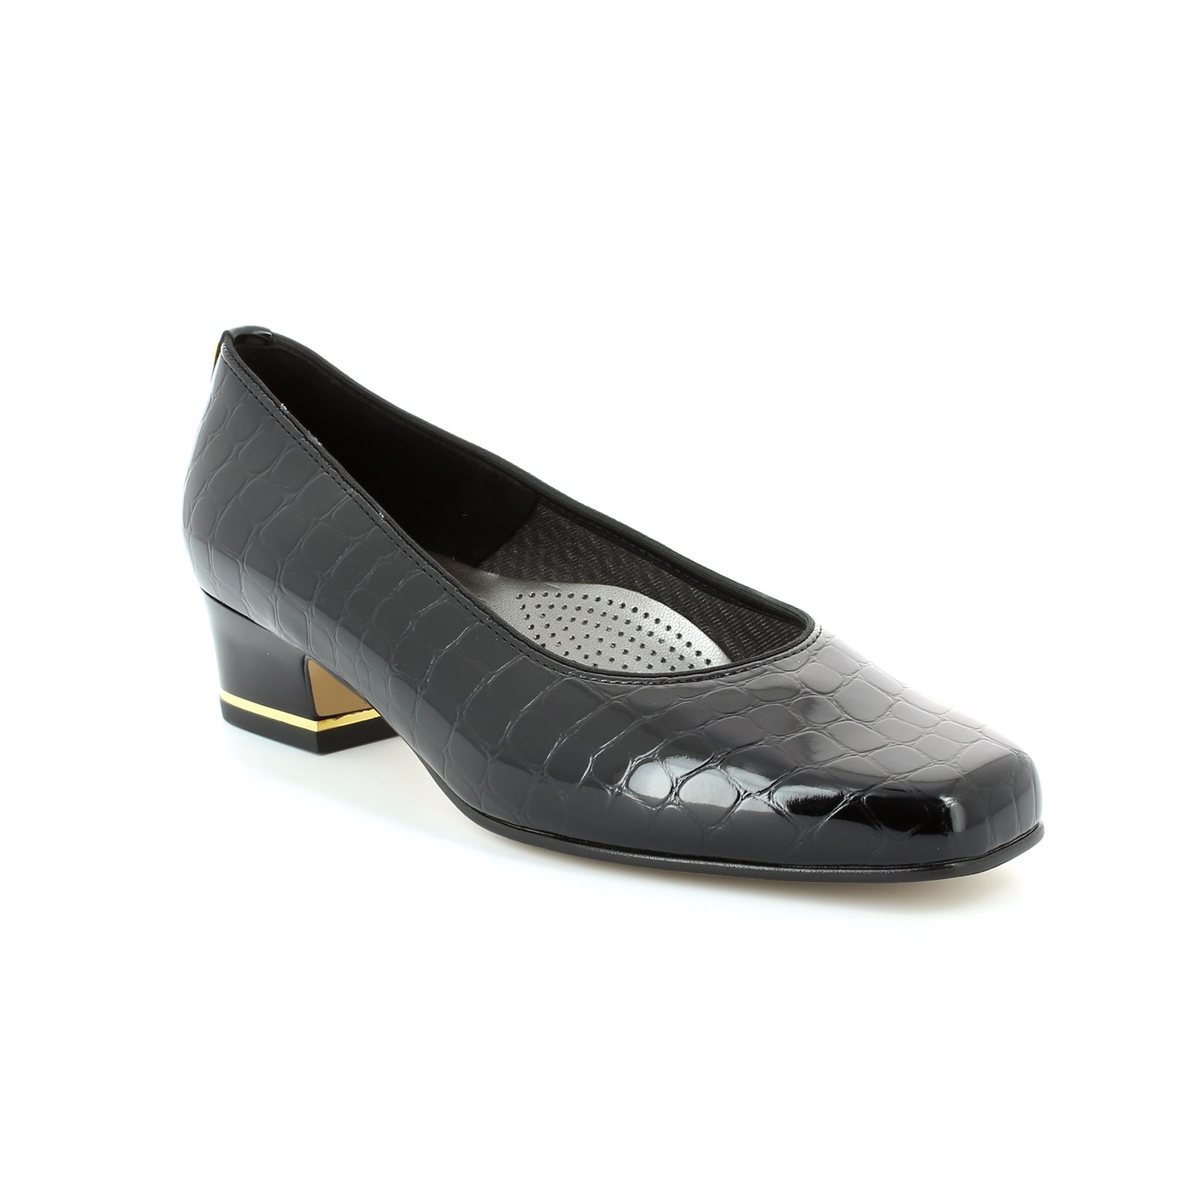 Ara Graco 41859-06 Black croc patent heeled comfort shoes